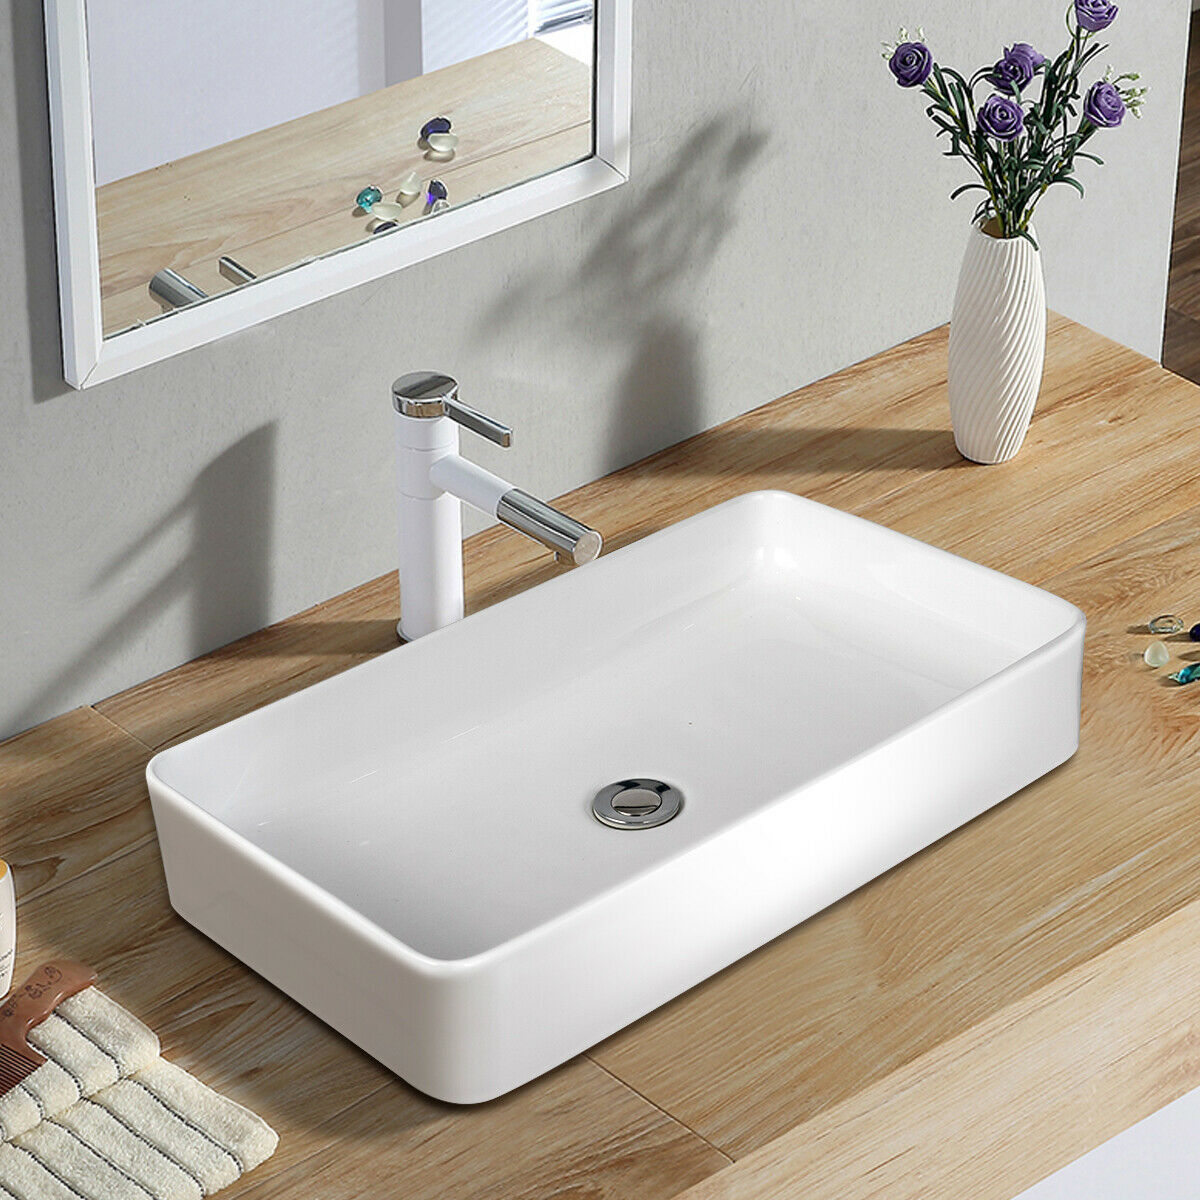 24 X 14 Rectangle Bathroom Ceramic Vessel Sink Vanity Art Basin W/Pop-up Drain